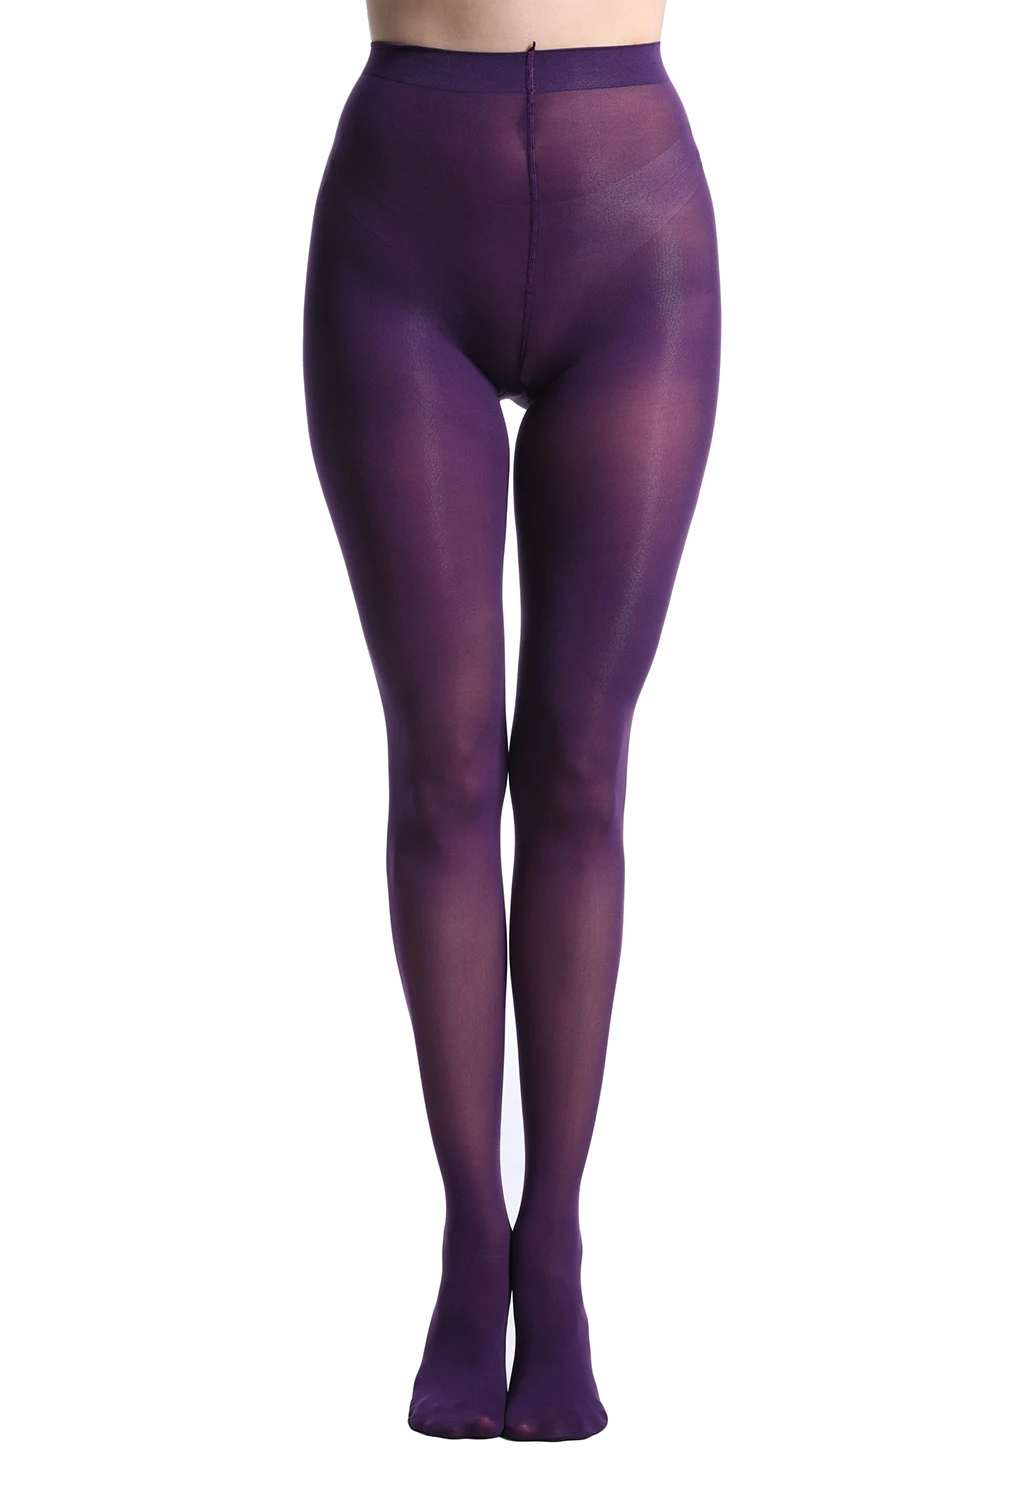 Dark Purple 80s 70s Disco Opaque Womens Pantyhose Stockings Hosiery Tights  80 Denier - Hosiery - Accessories - Themes